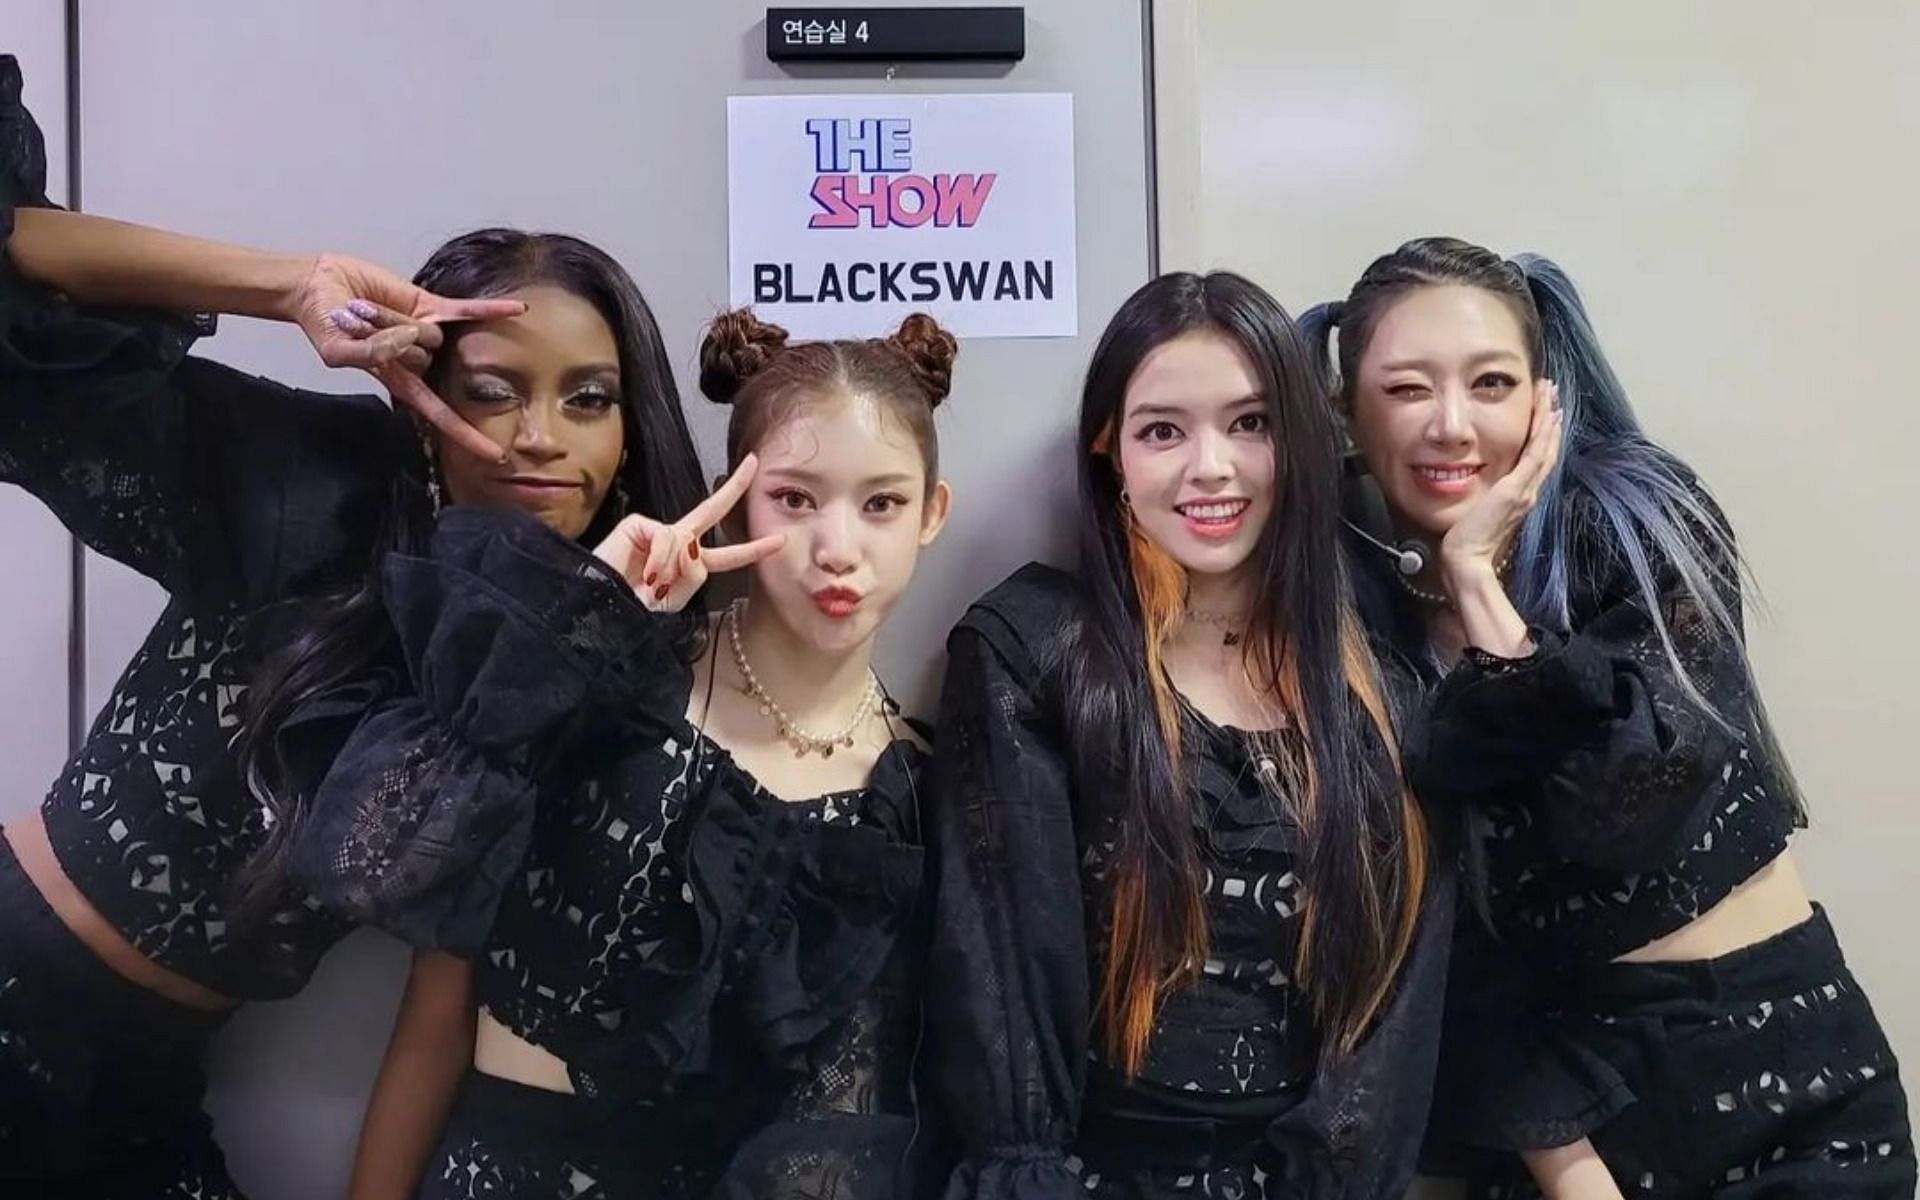 Black swan members